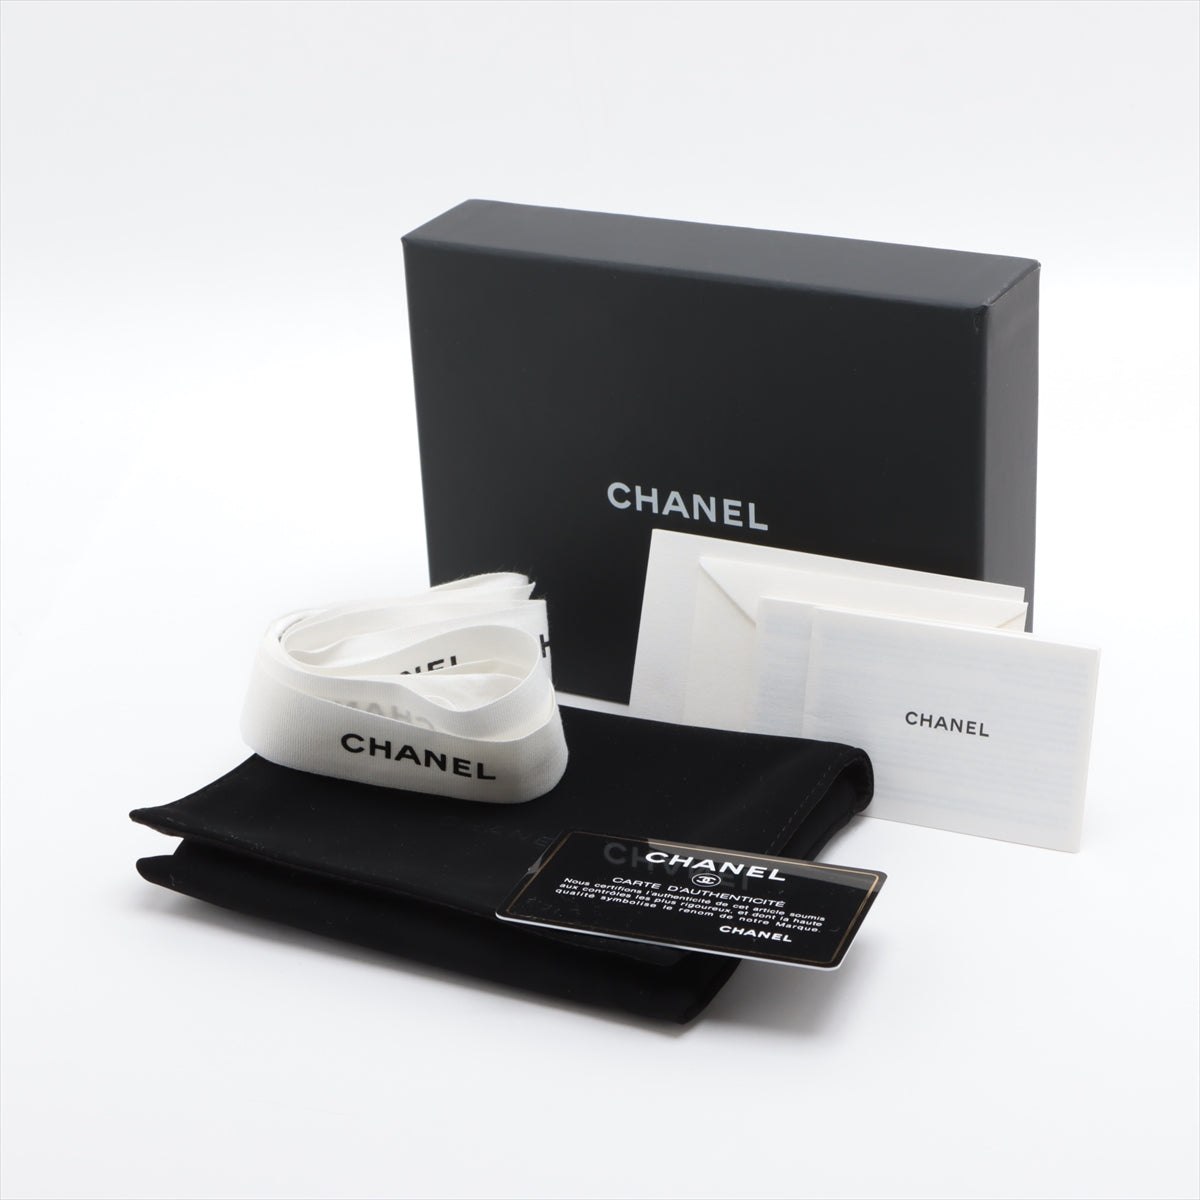 Chanel Mini Matrasse  Chain Shoulder Bag Beige G  32rd